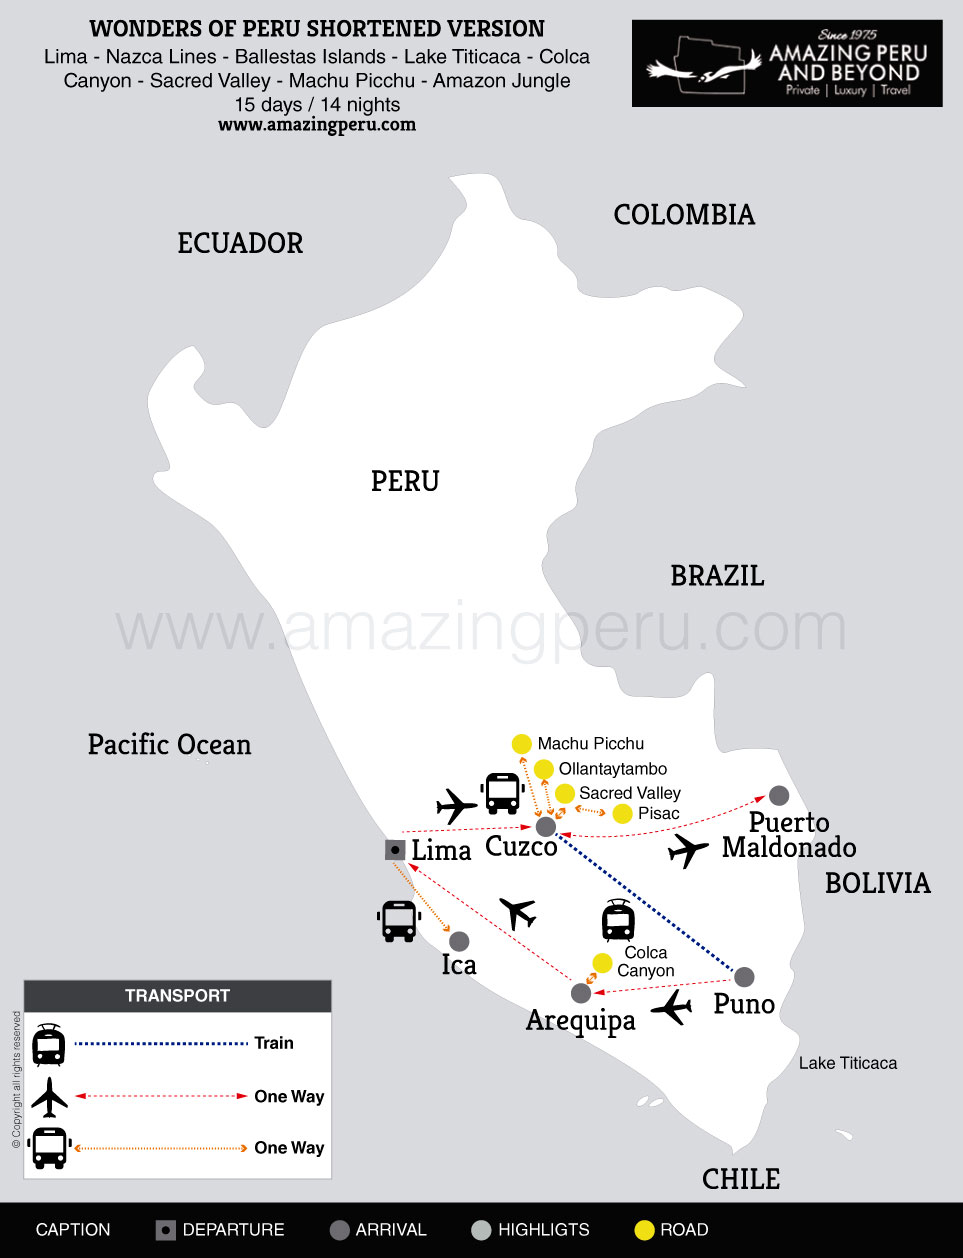 2022 Wonders of Peru Shortened Version - 15 days / 14 nights.